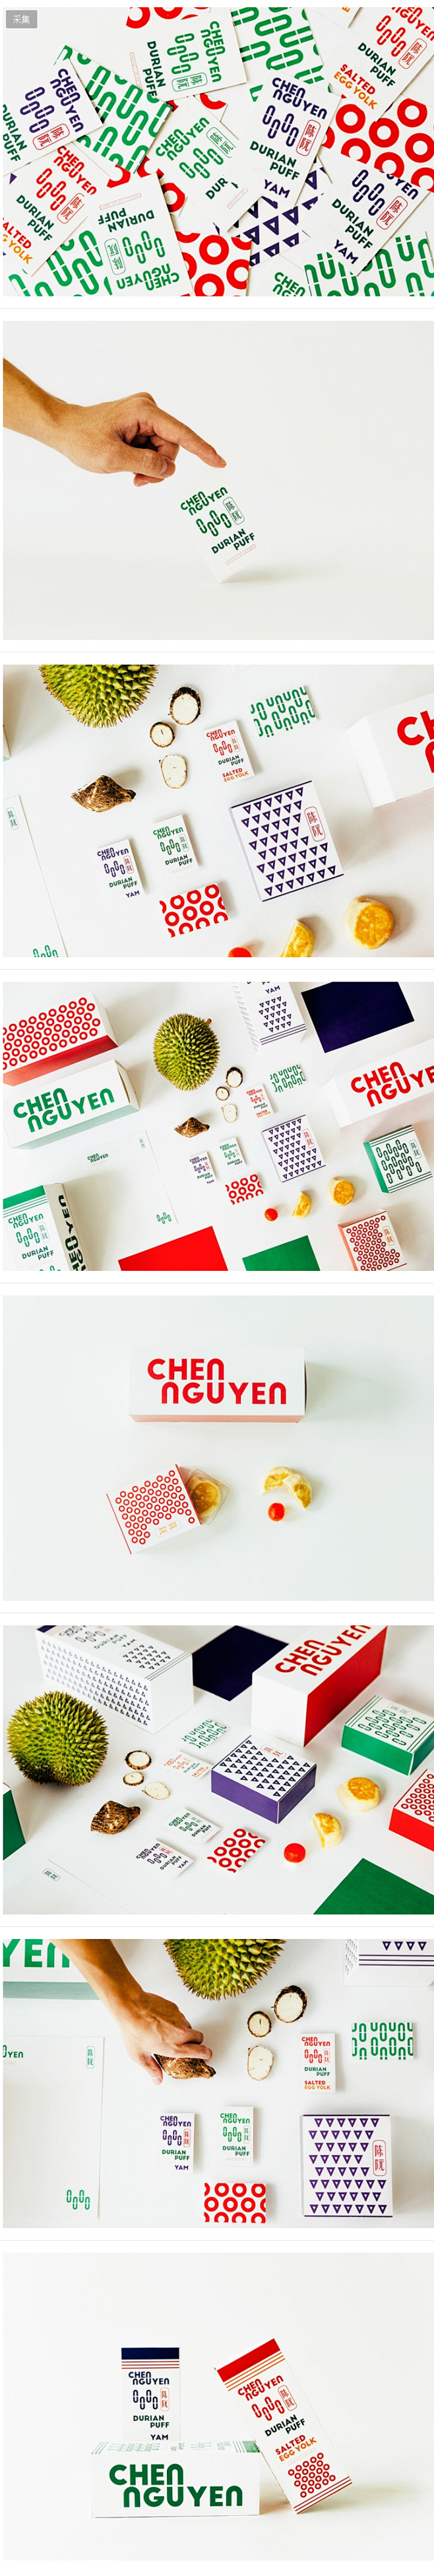 Chen Nguyen越南风味食品品牌和...